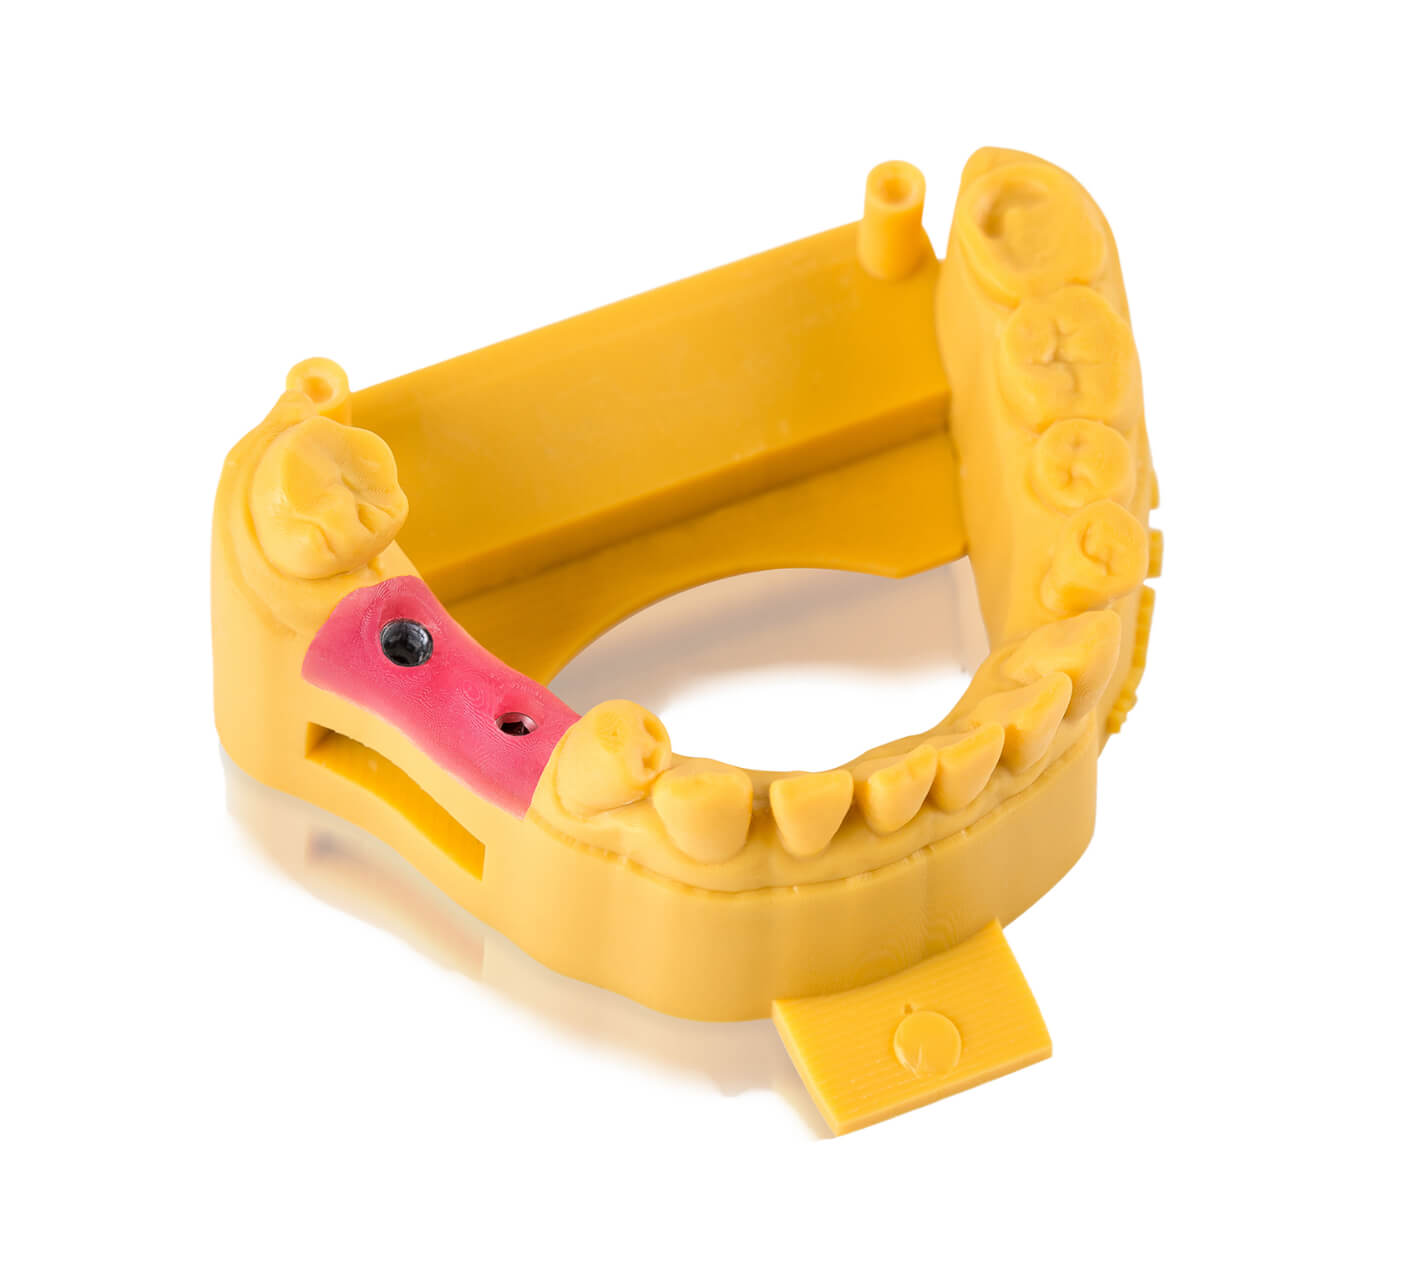 model v2.0 Dental implant repair material uniontech